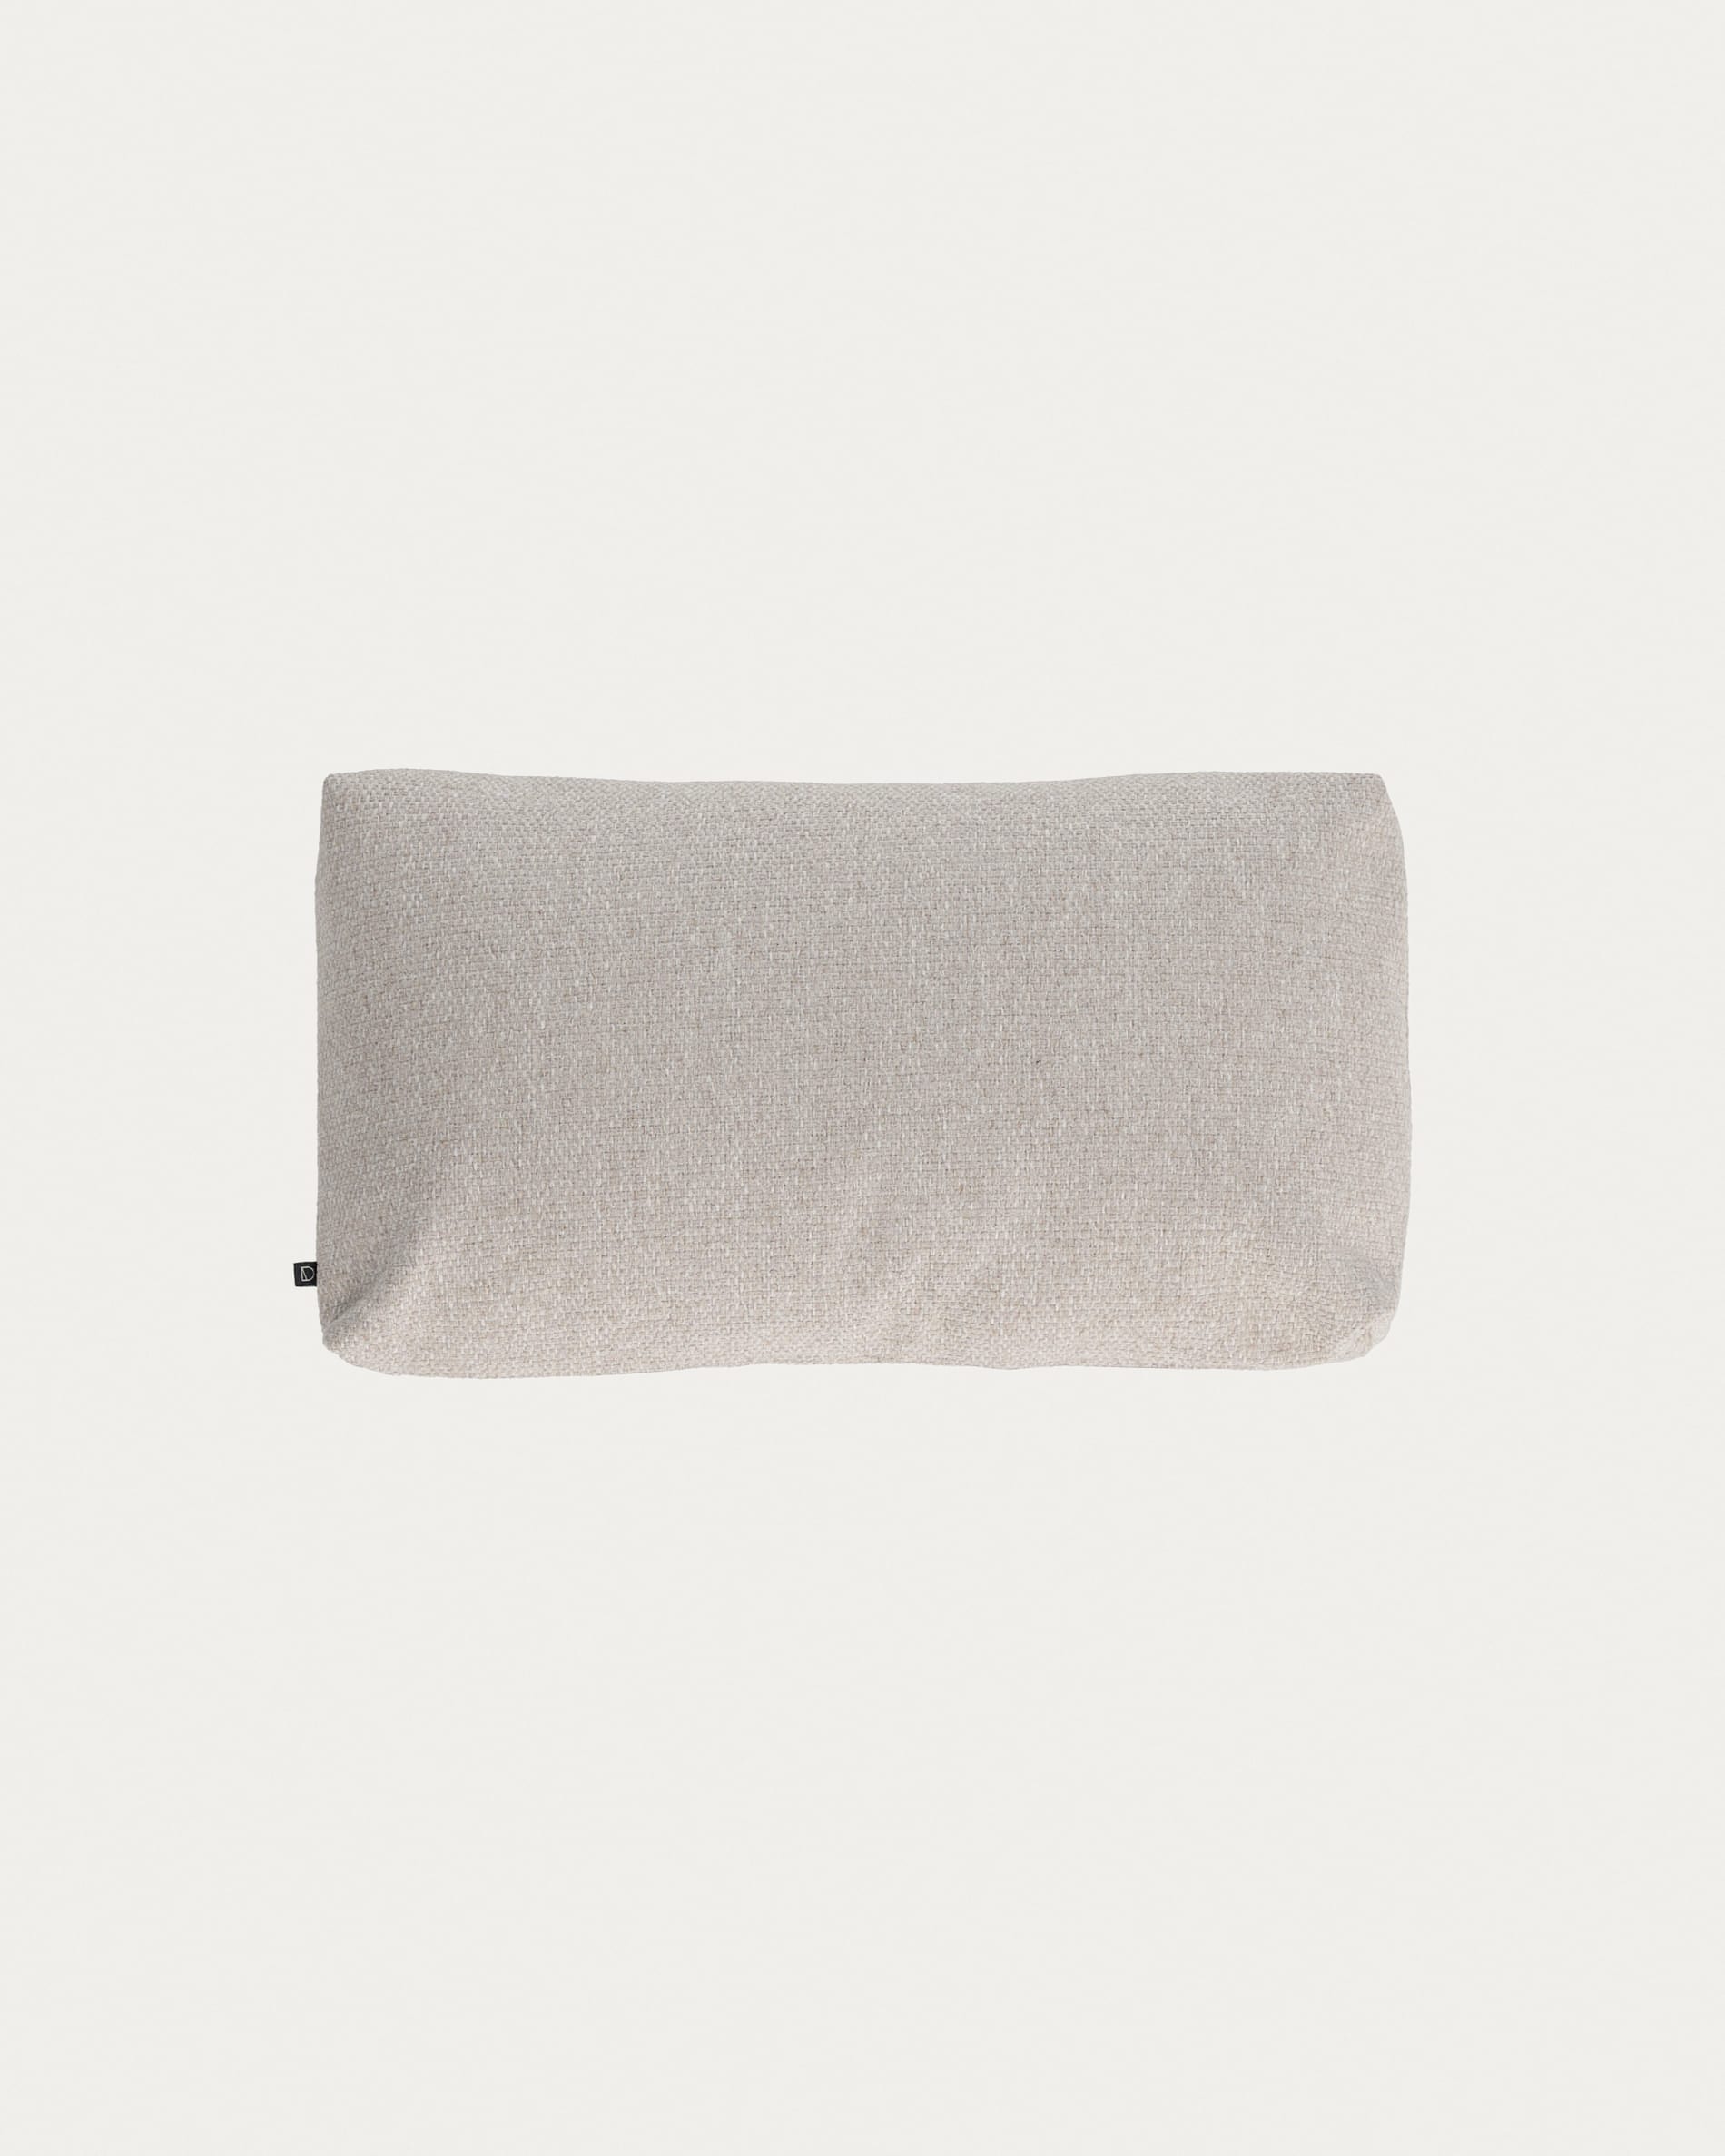 Galene cushion cover in beige, 30 x 50 cm